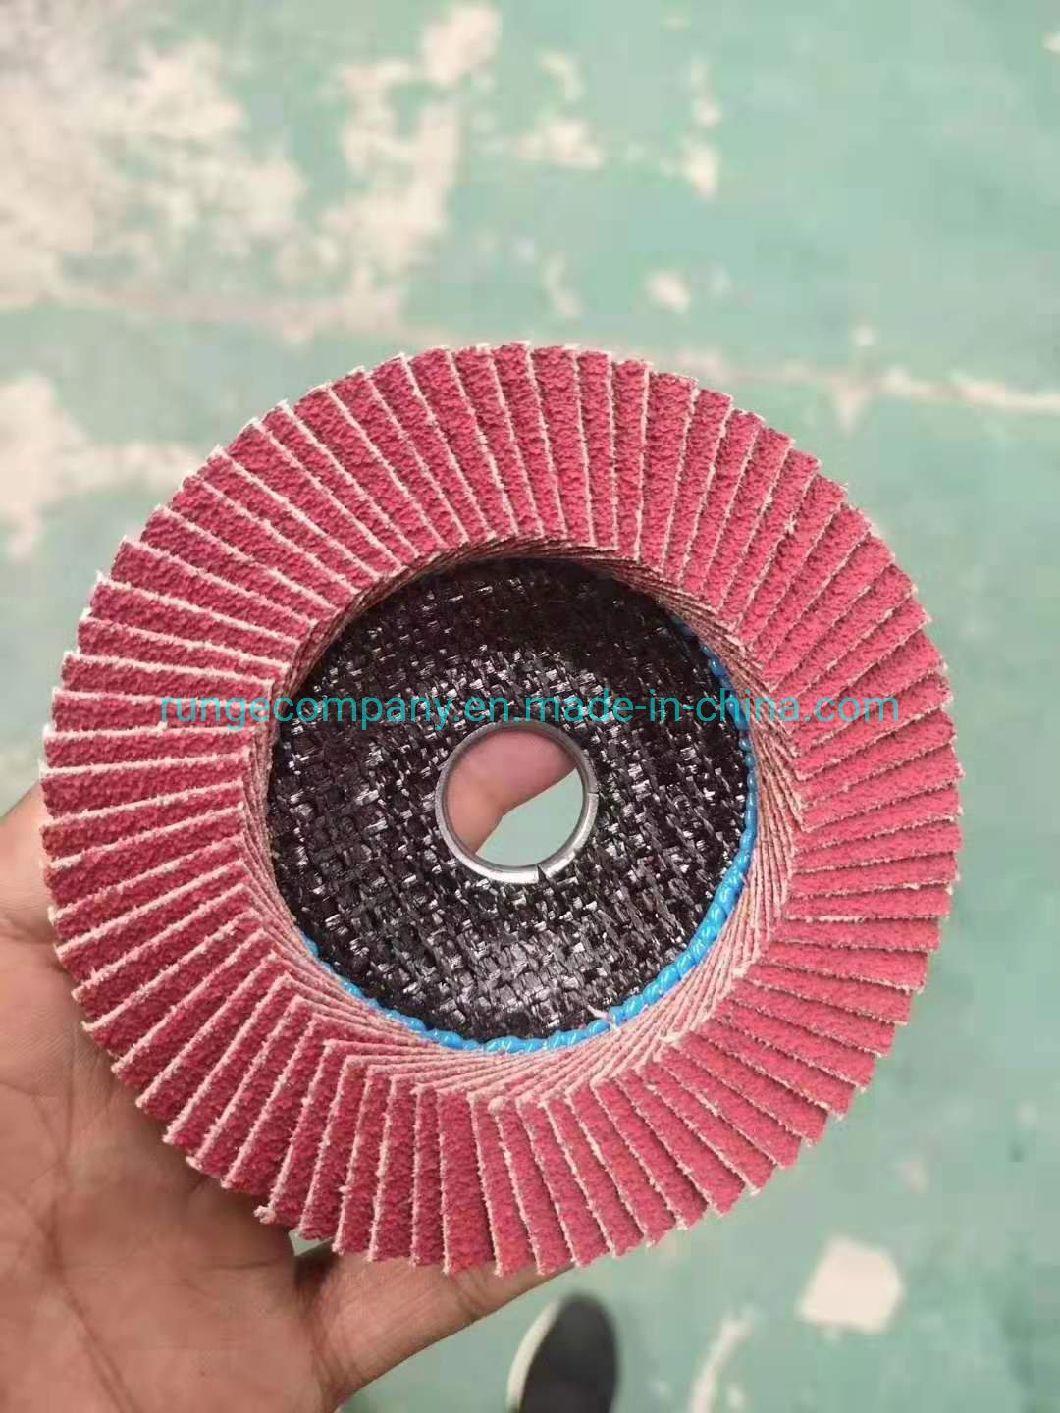 4.5inch Welding Polishing Brushing Flap Disc Grindingwheel for Electric Power Tools